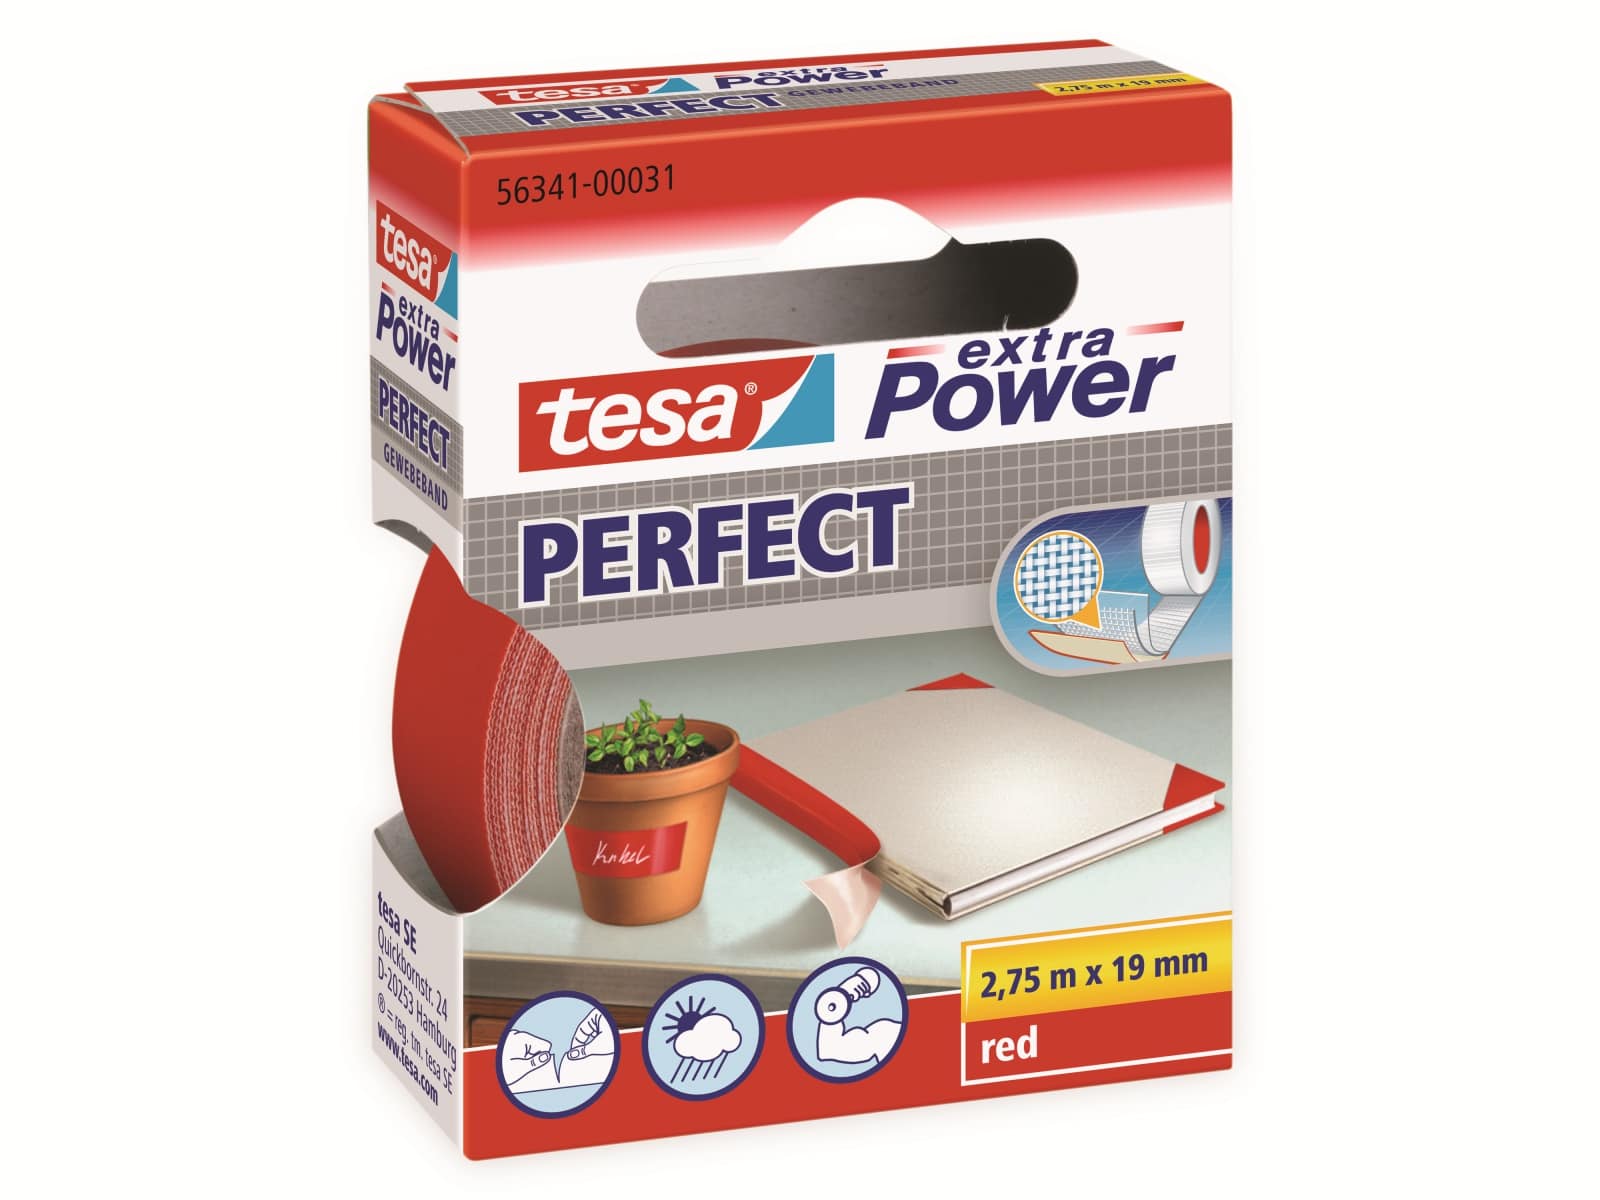 TESA extra Power® Perfect Gewebeband, rot, 2,75m:19mm, 56341-00031-03